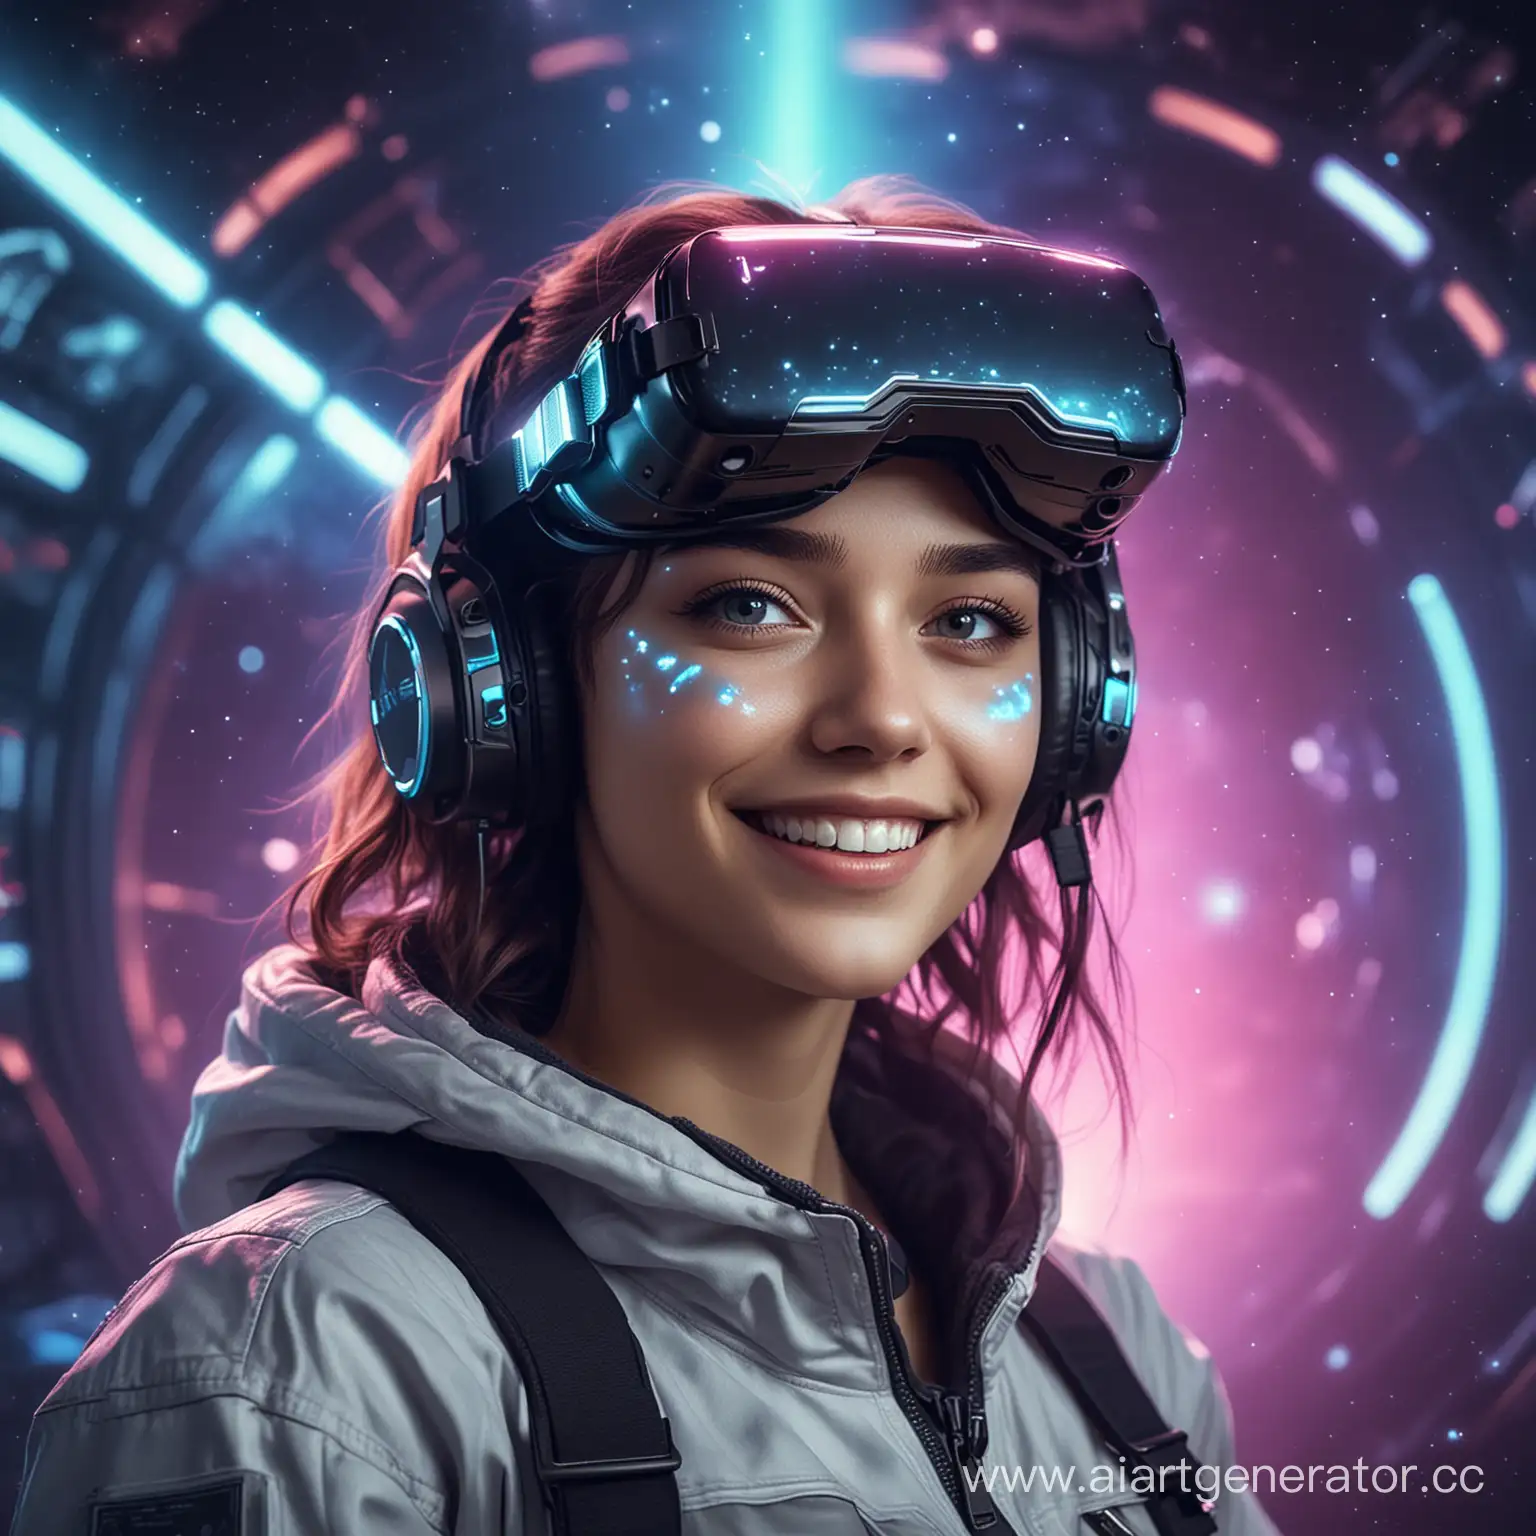 Cyberpunk-Space-Odyssey-Girl-Smiling-in-VR-Gear